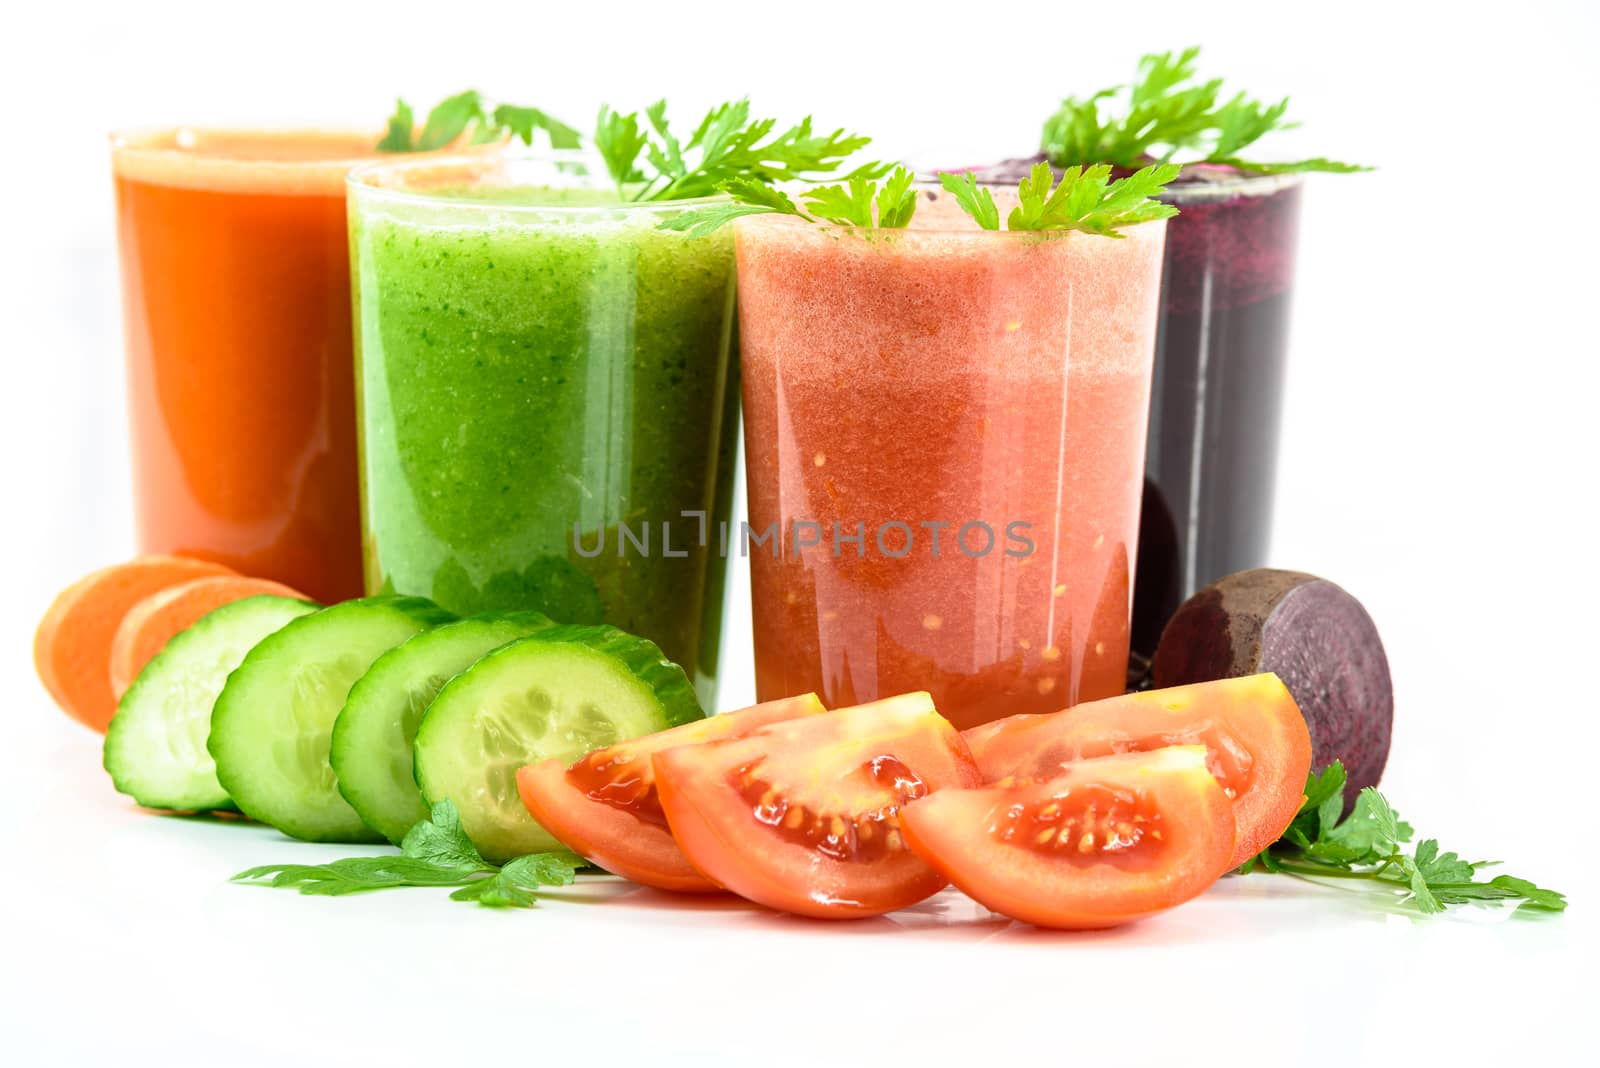 Varied types of vegetable juices by wdnet_studio